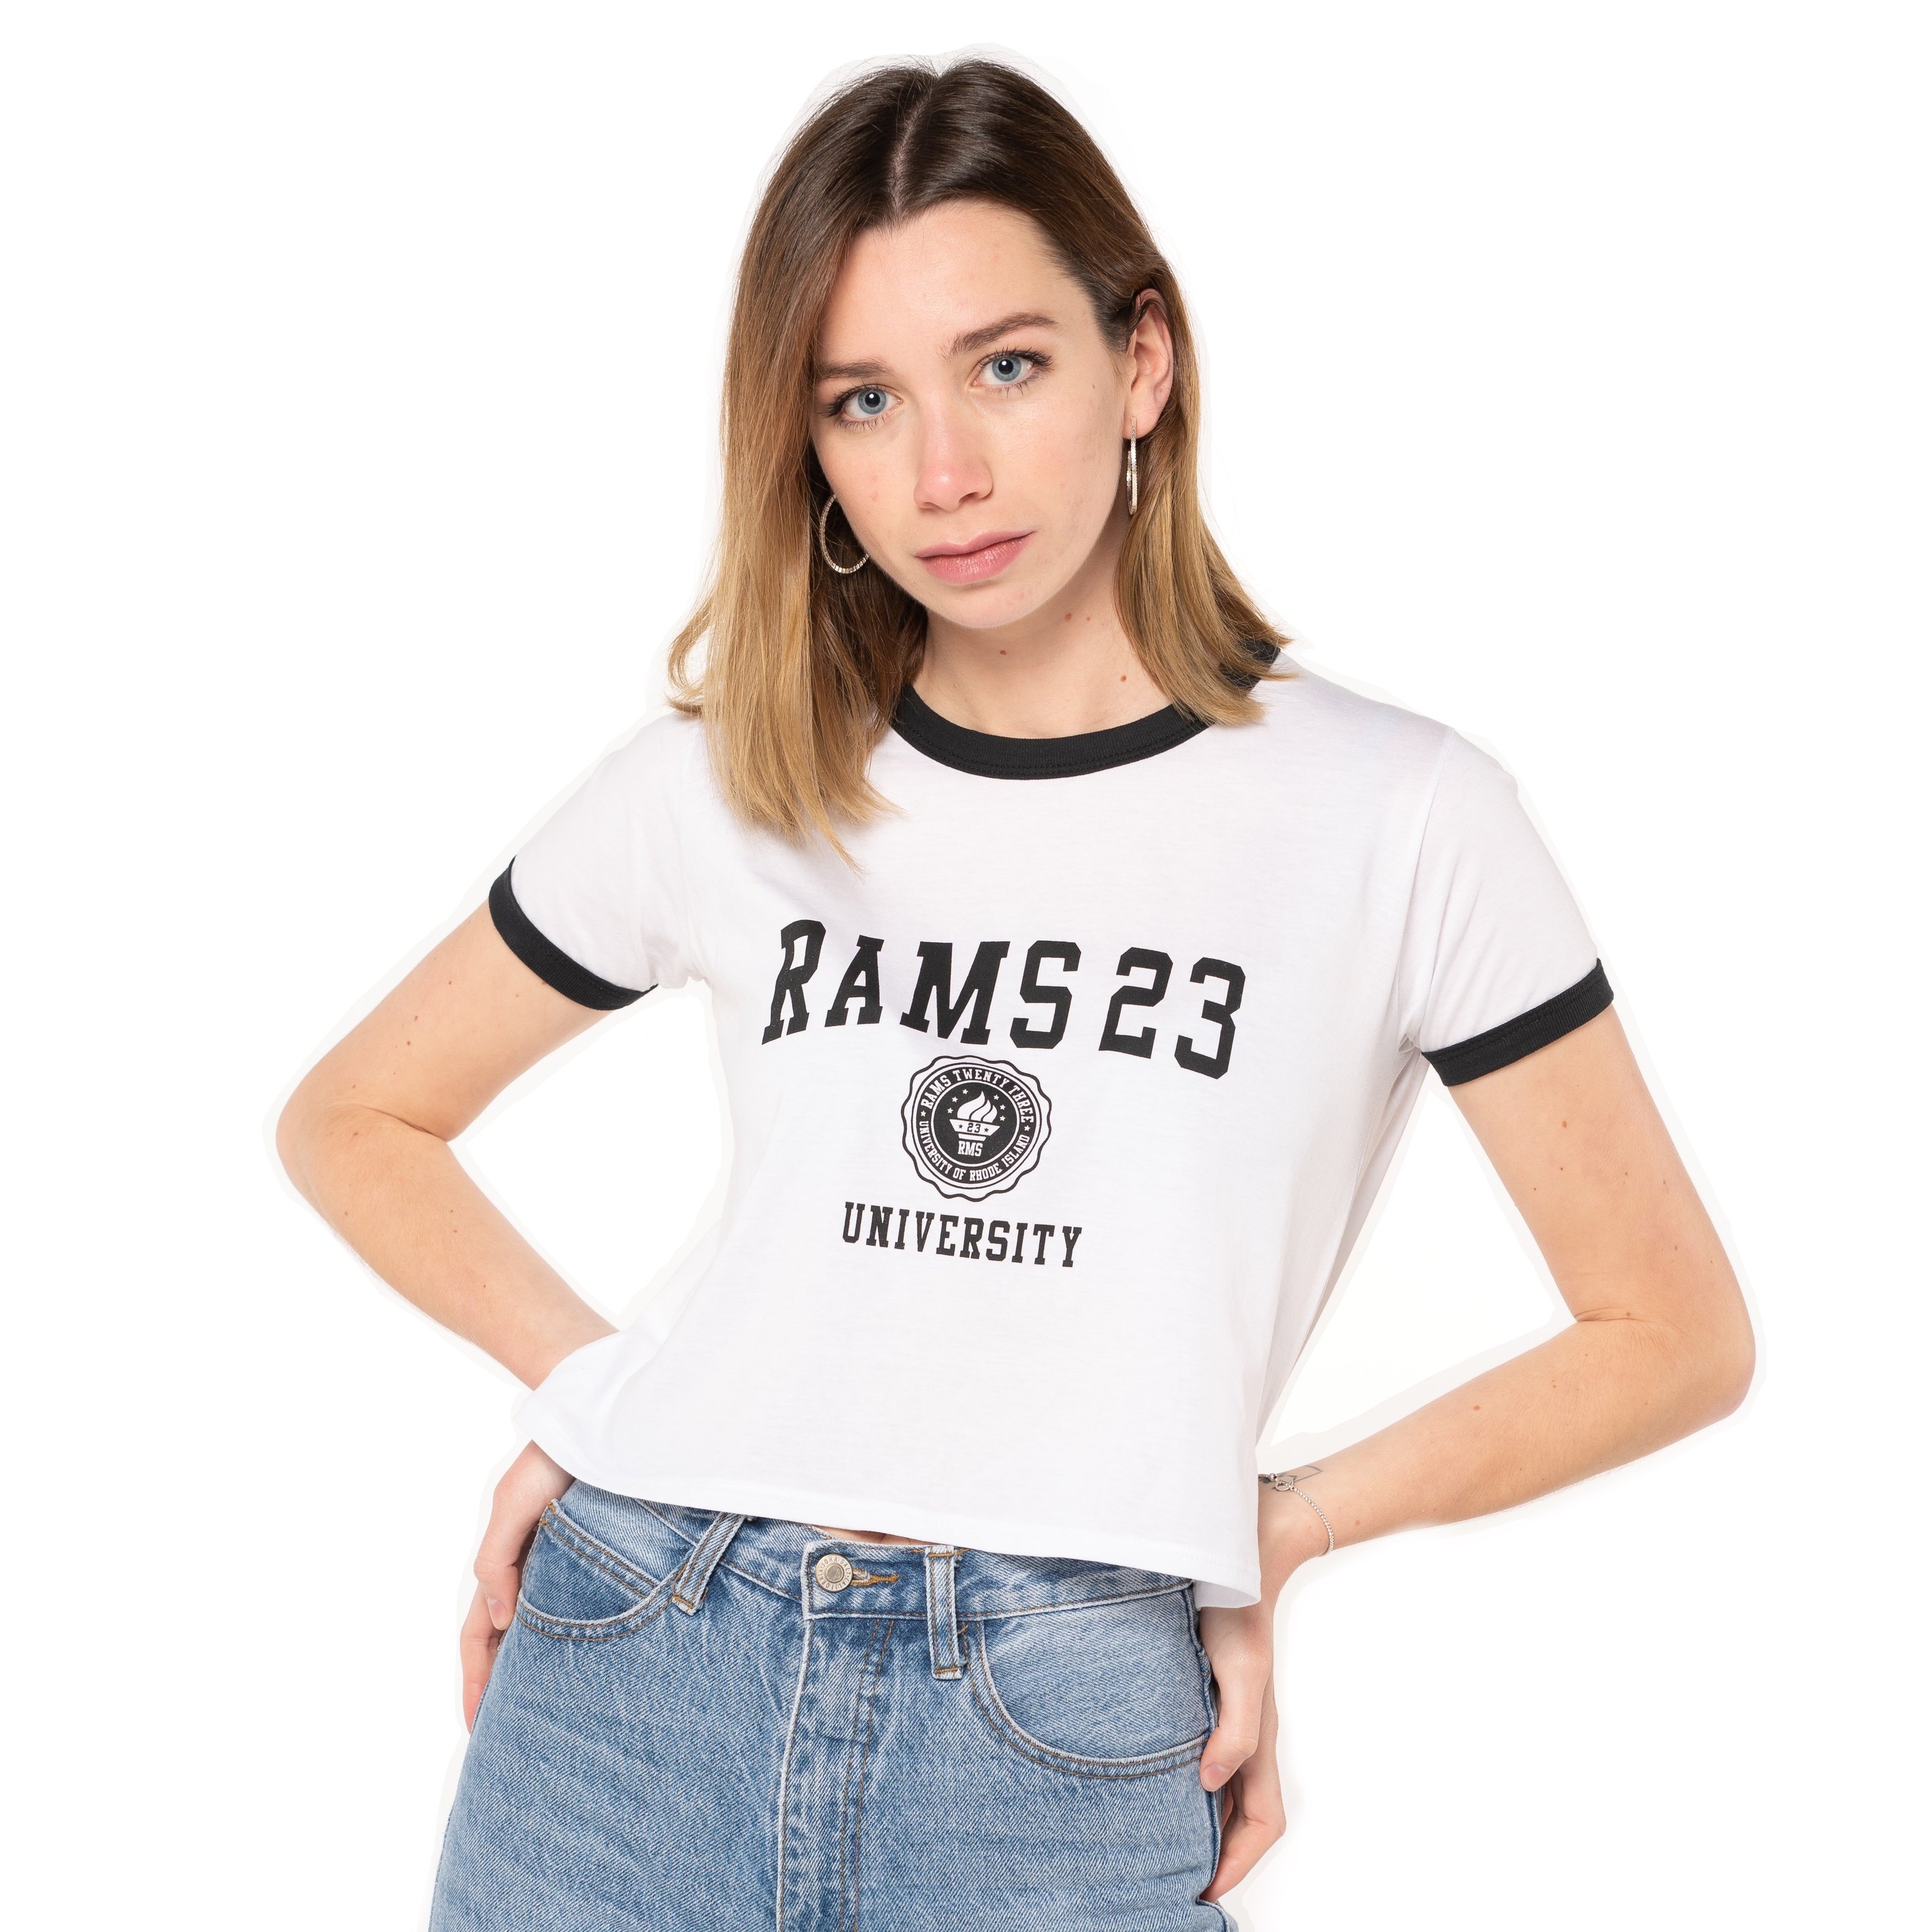 Camiseta Manga Corta University Rams 23